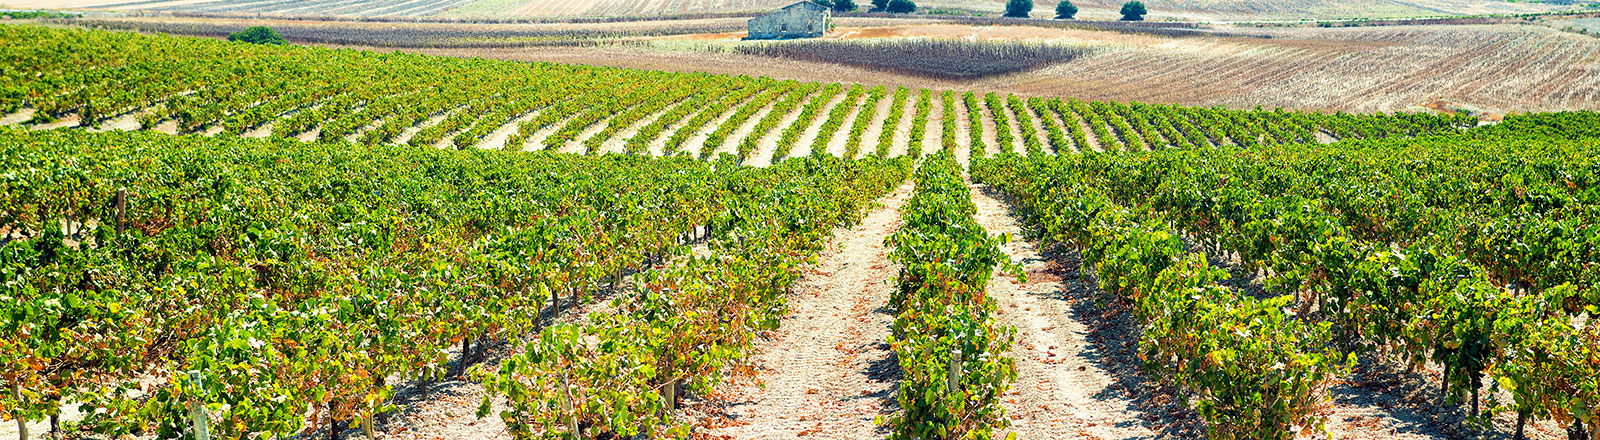 Weinreben nahe Jerez in Andalusien